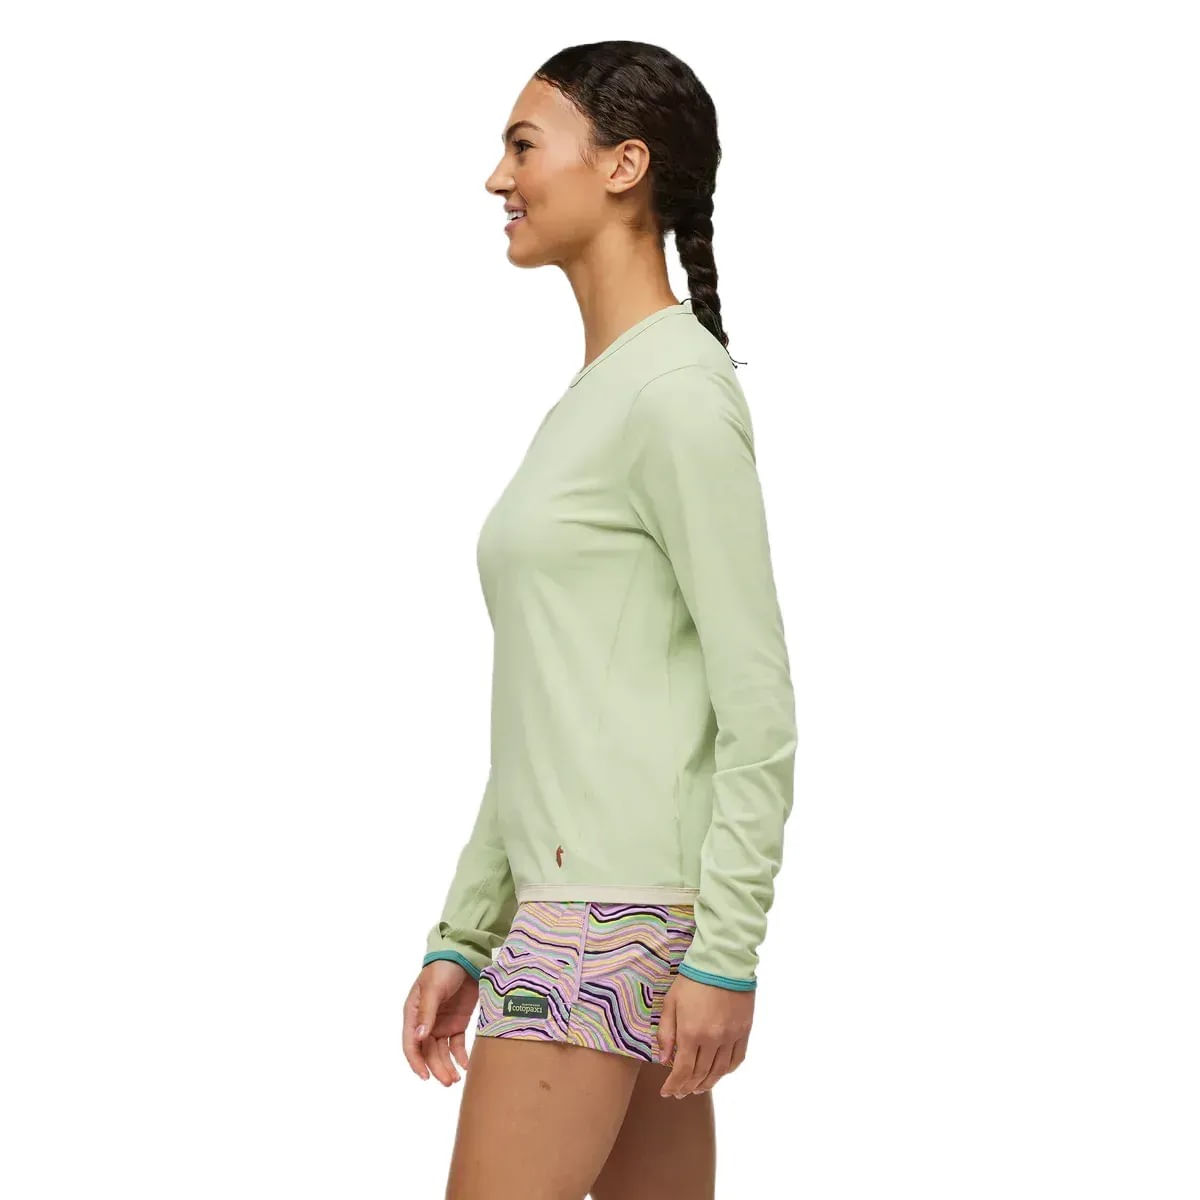 Cotopaxi Sombra Long-Sleeve Sun Shirt - Women's - Bobwards.com